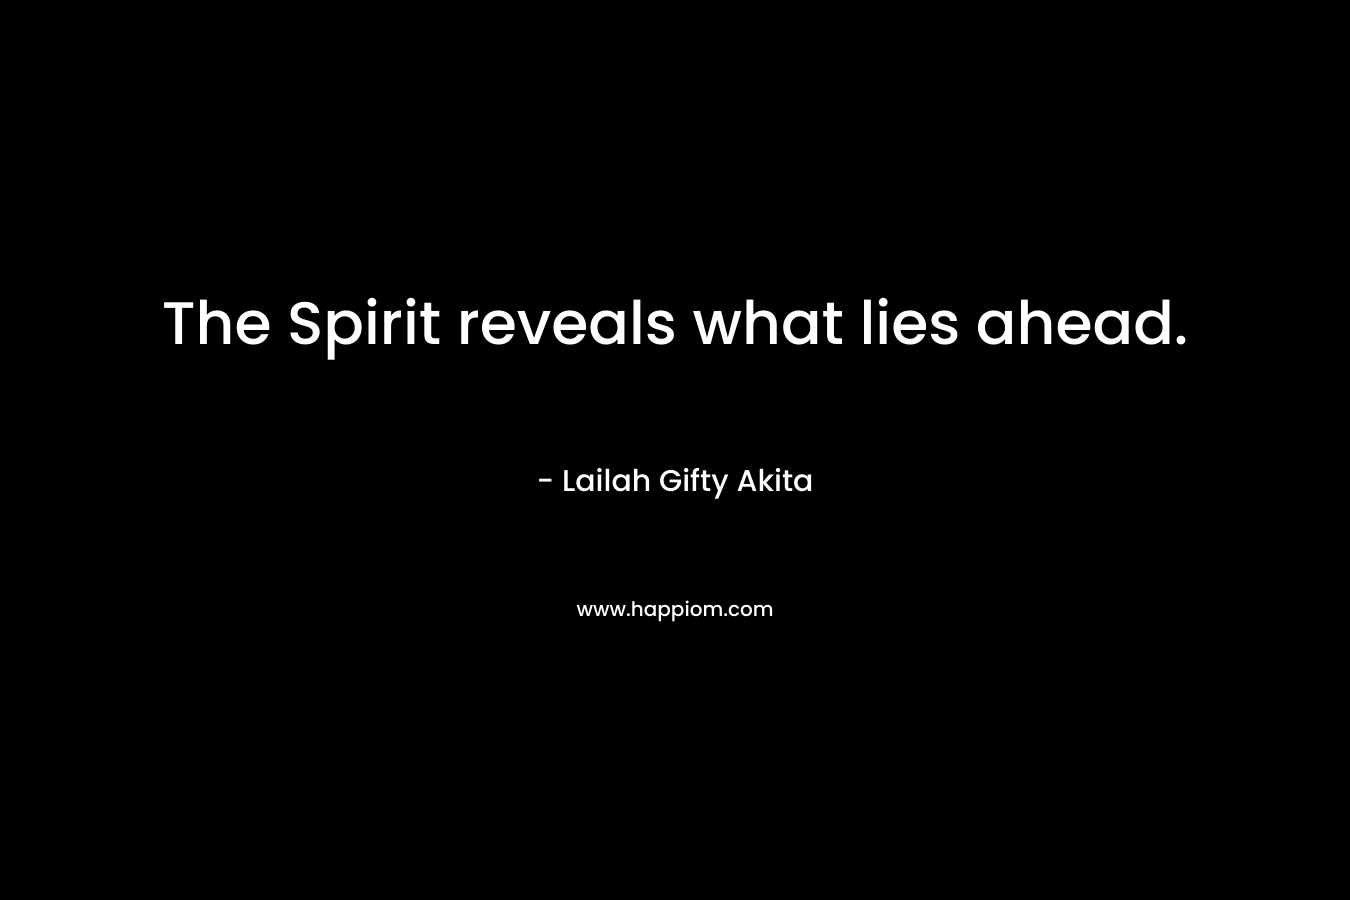 The Spirit reveals what lies ahead.